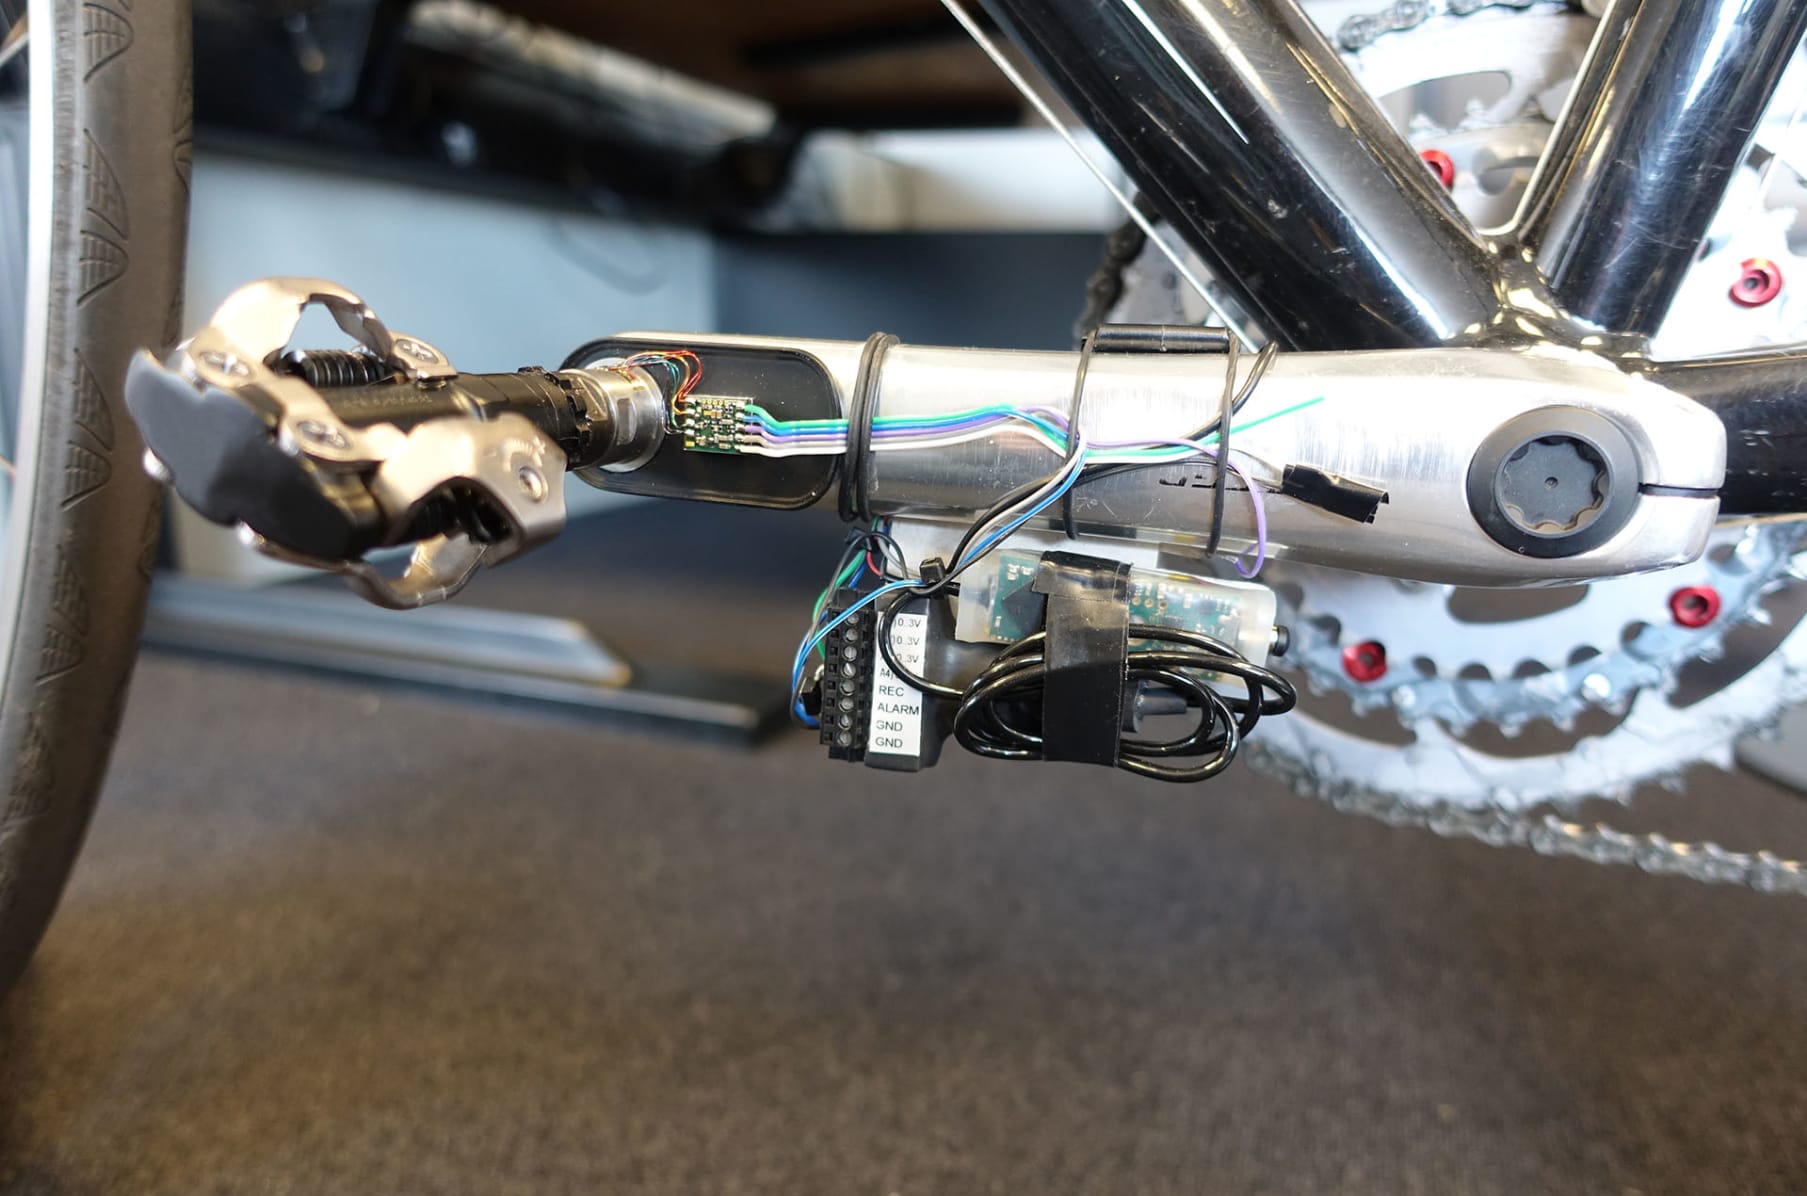 Proberen ras zitten Cycling Power Meter at a Breakthrough Price | Indiegogo